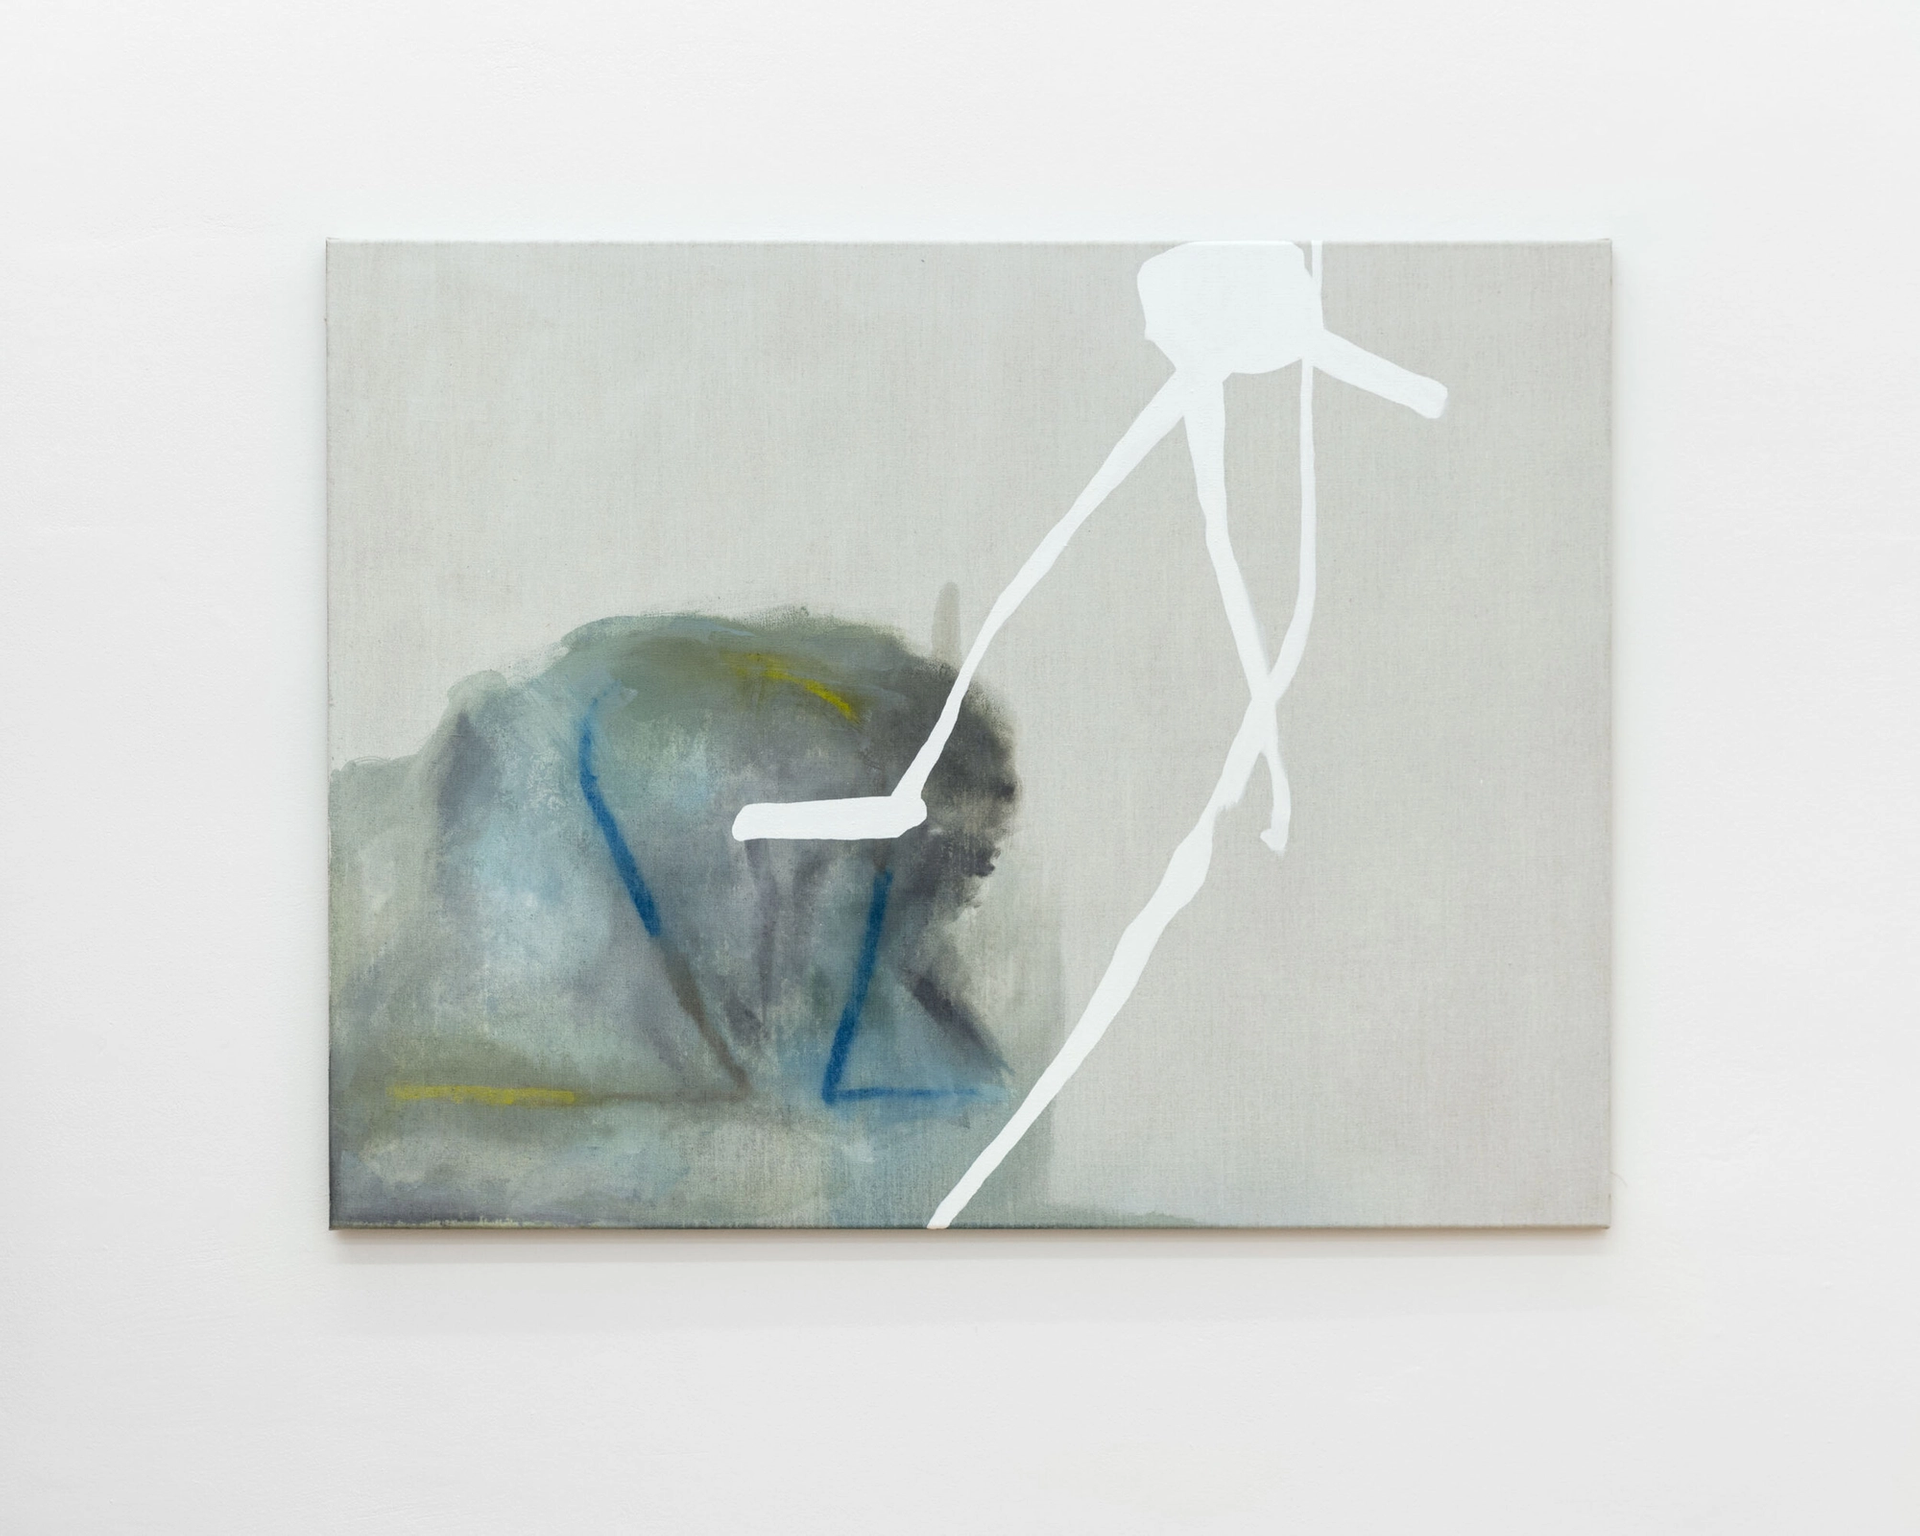 Malte Zenses, Flussdelta und Omega, 2020, lacquer and oil on canvas, 100 × 130 cm | 39 1/3 × 51 1/4 in, photo: Sebastian Kissel